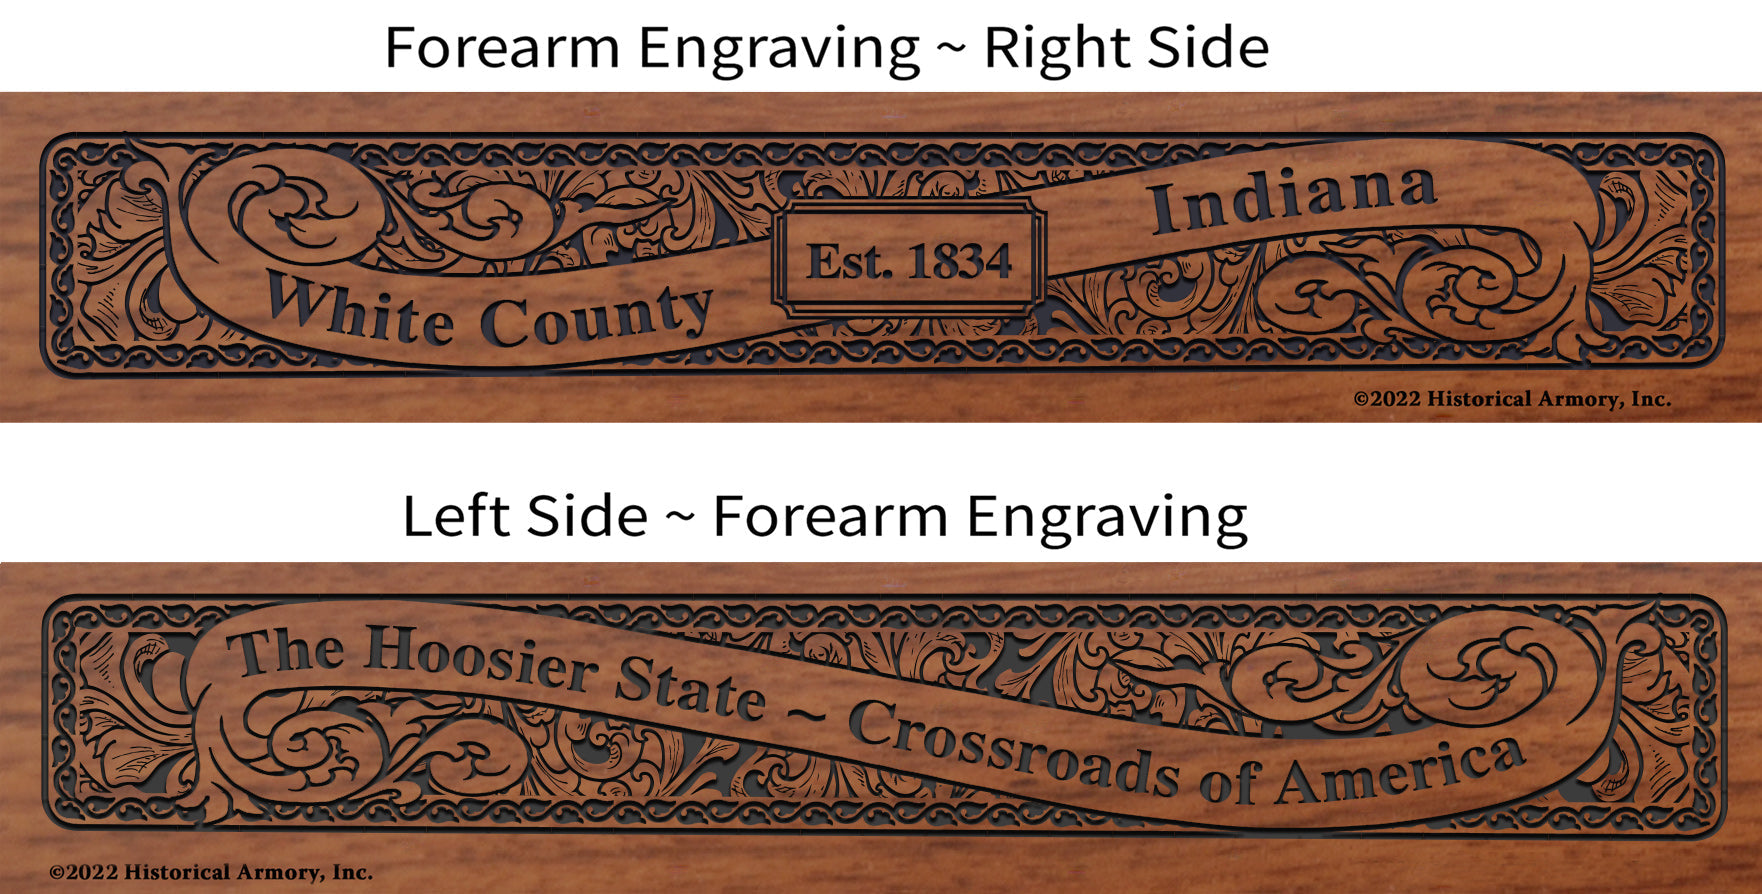 White County Indiana Engraved Rifle Forearm